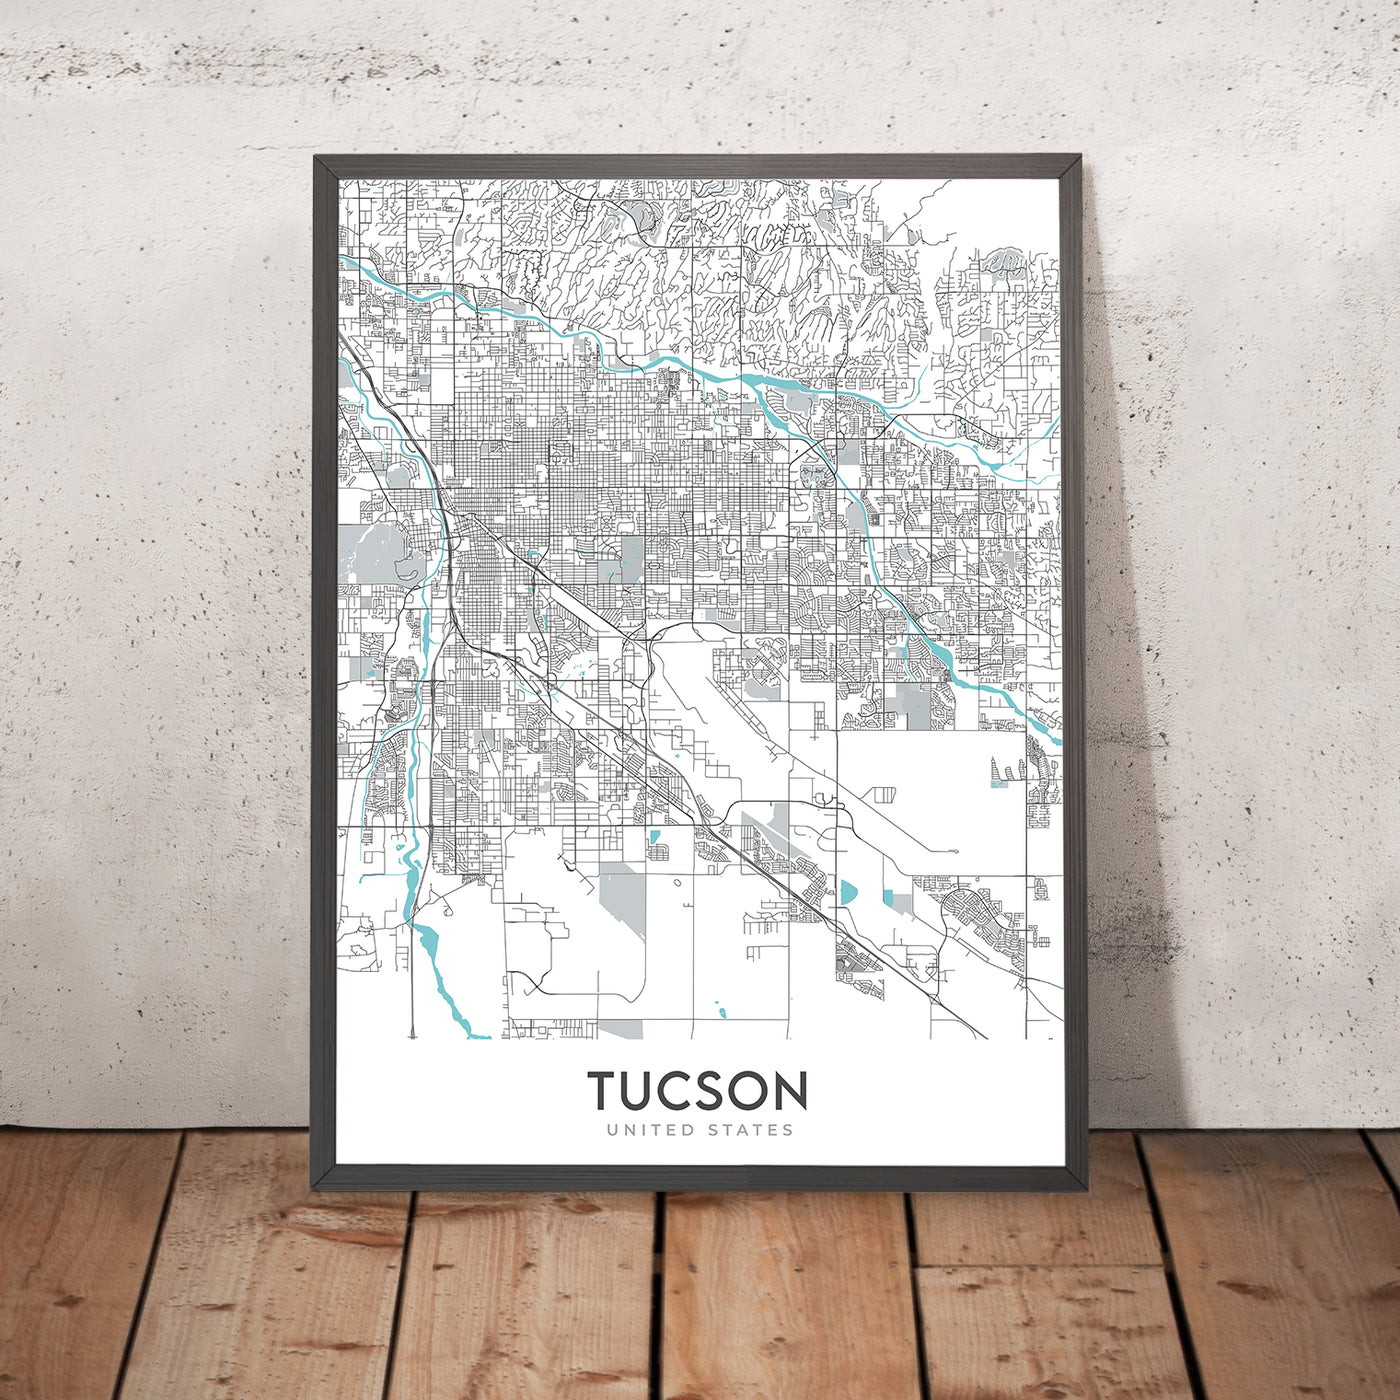 Moderner Stadtplan von Tucson, AZ: Universität von Arizona, Pima Air & Space Museum, Saguaro NP, Sabino Canyon, Mount Lemmon